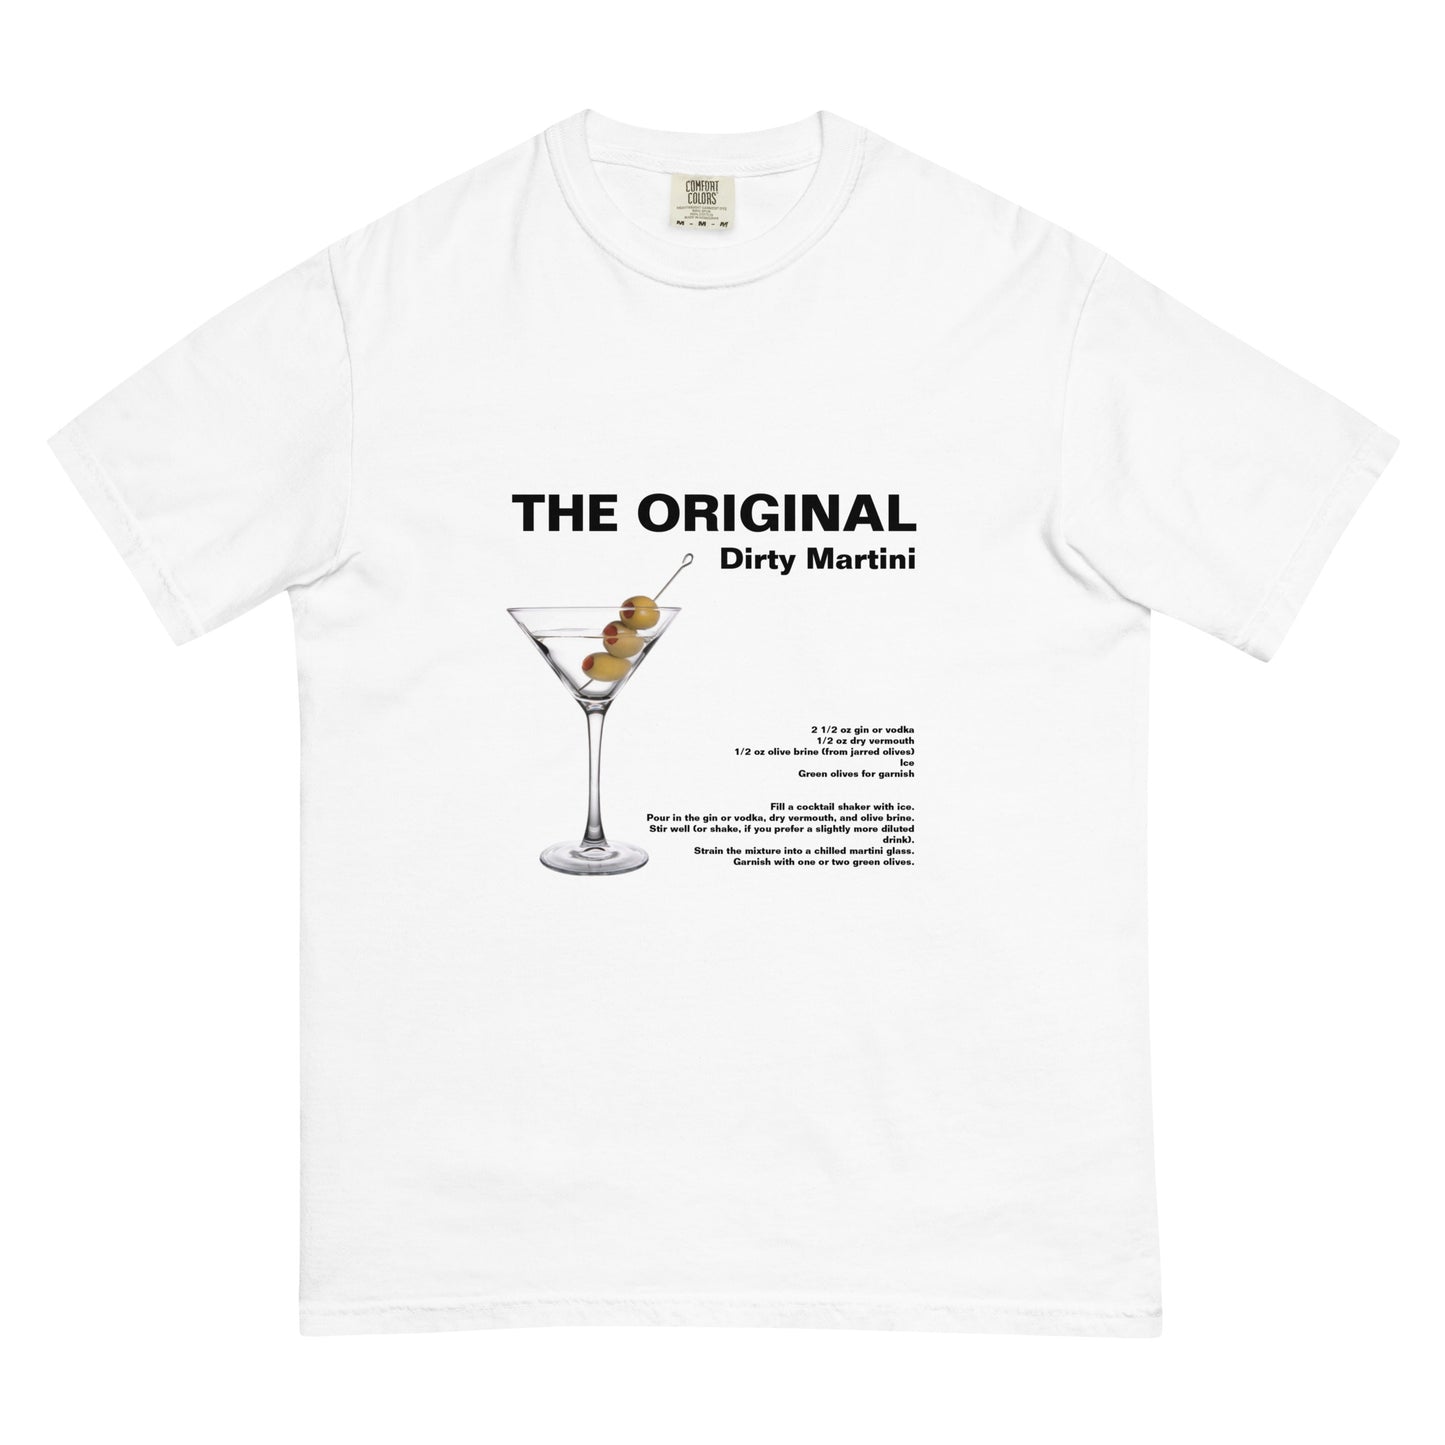 Dirty Martini heavyweight t-shirt